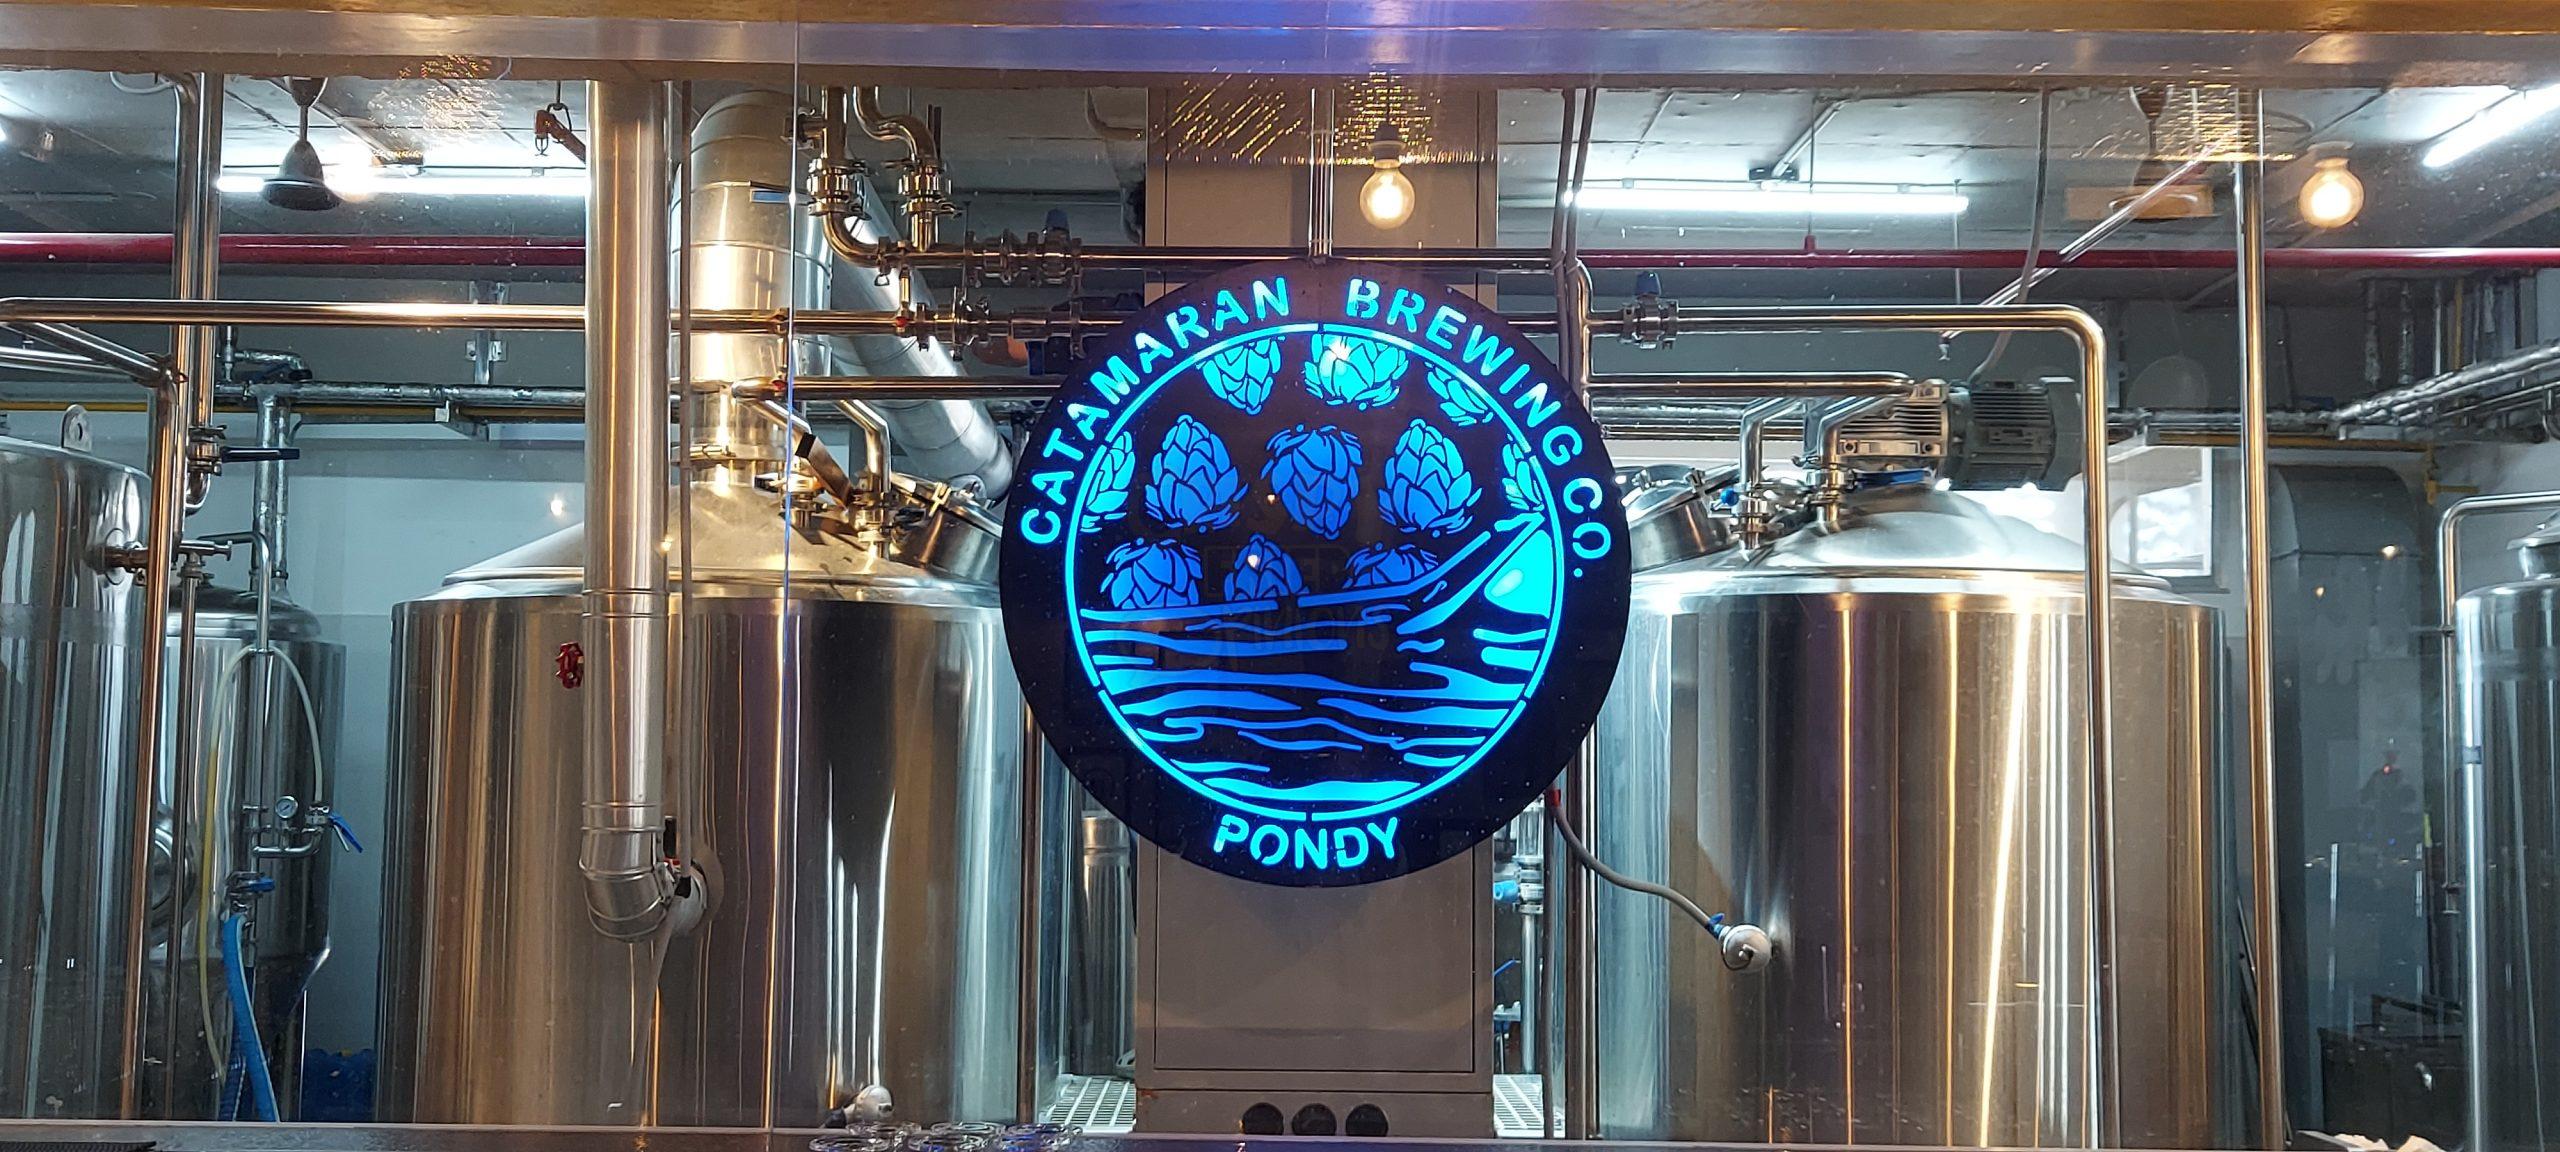 catamaran brewing company logo